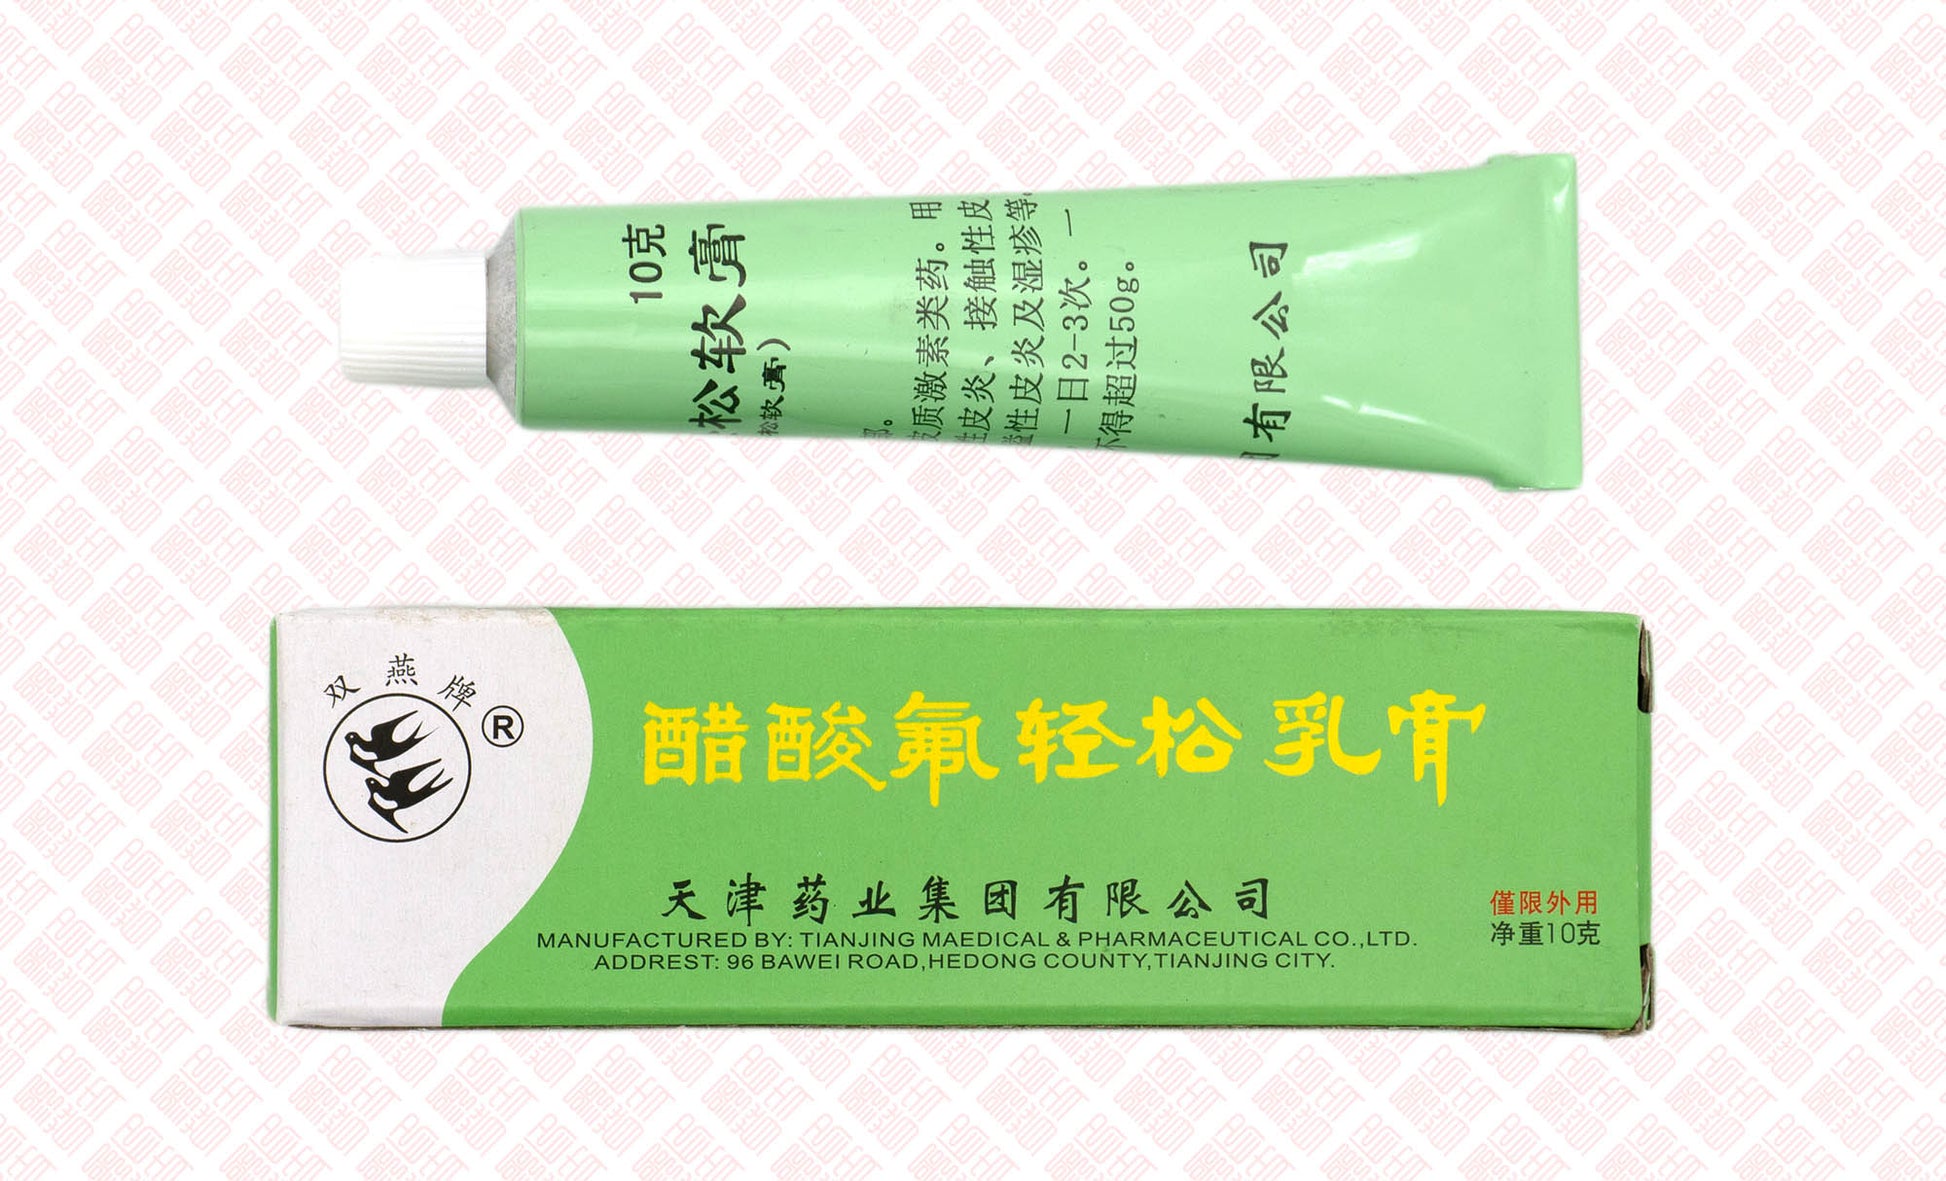 Fuqingsong Relief Cream 醋酸氟轻松软膏 UPC 6901986000081 Indochina Ginseng 印支参茸